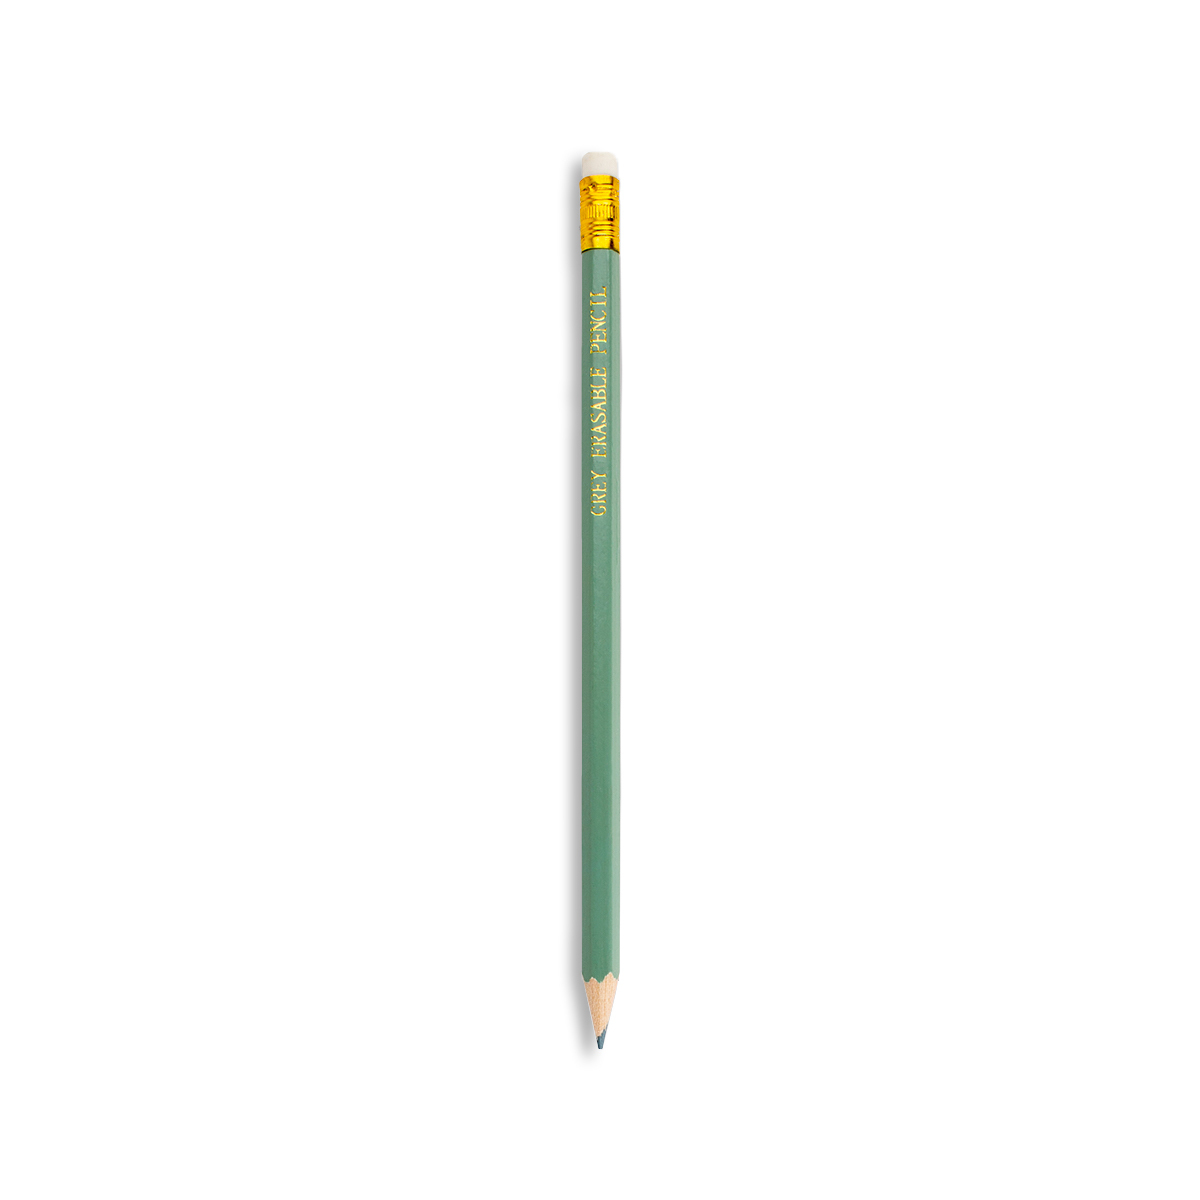 Pens, Pencils & Markers - WAWAK Sewing Supplies